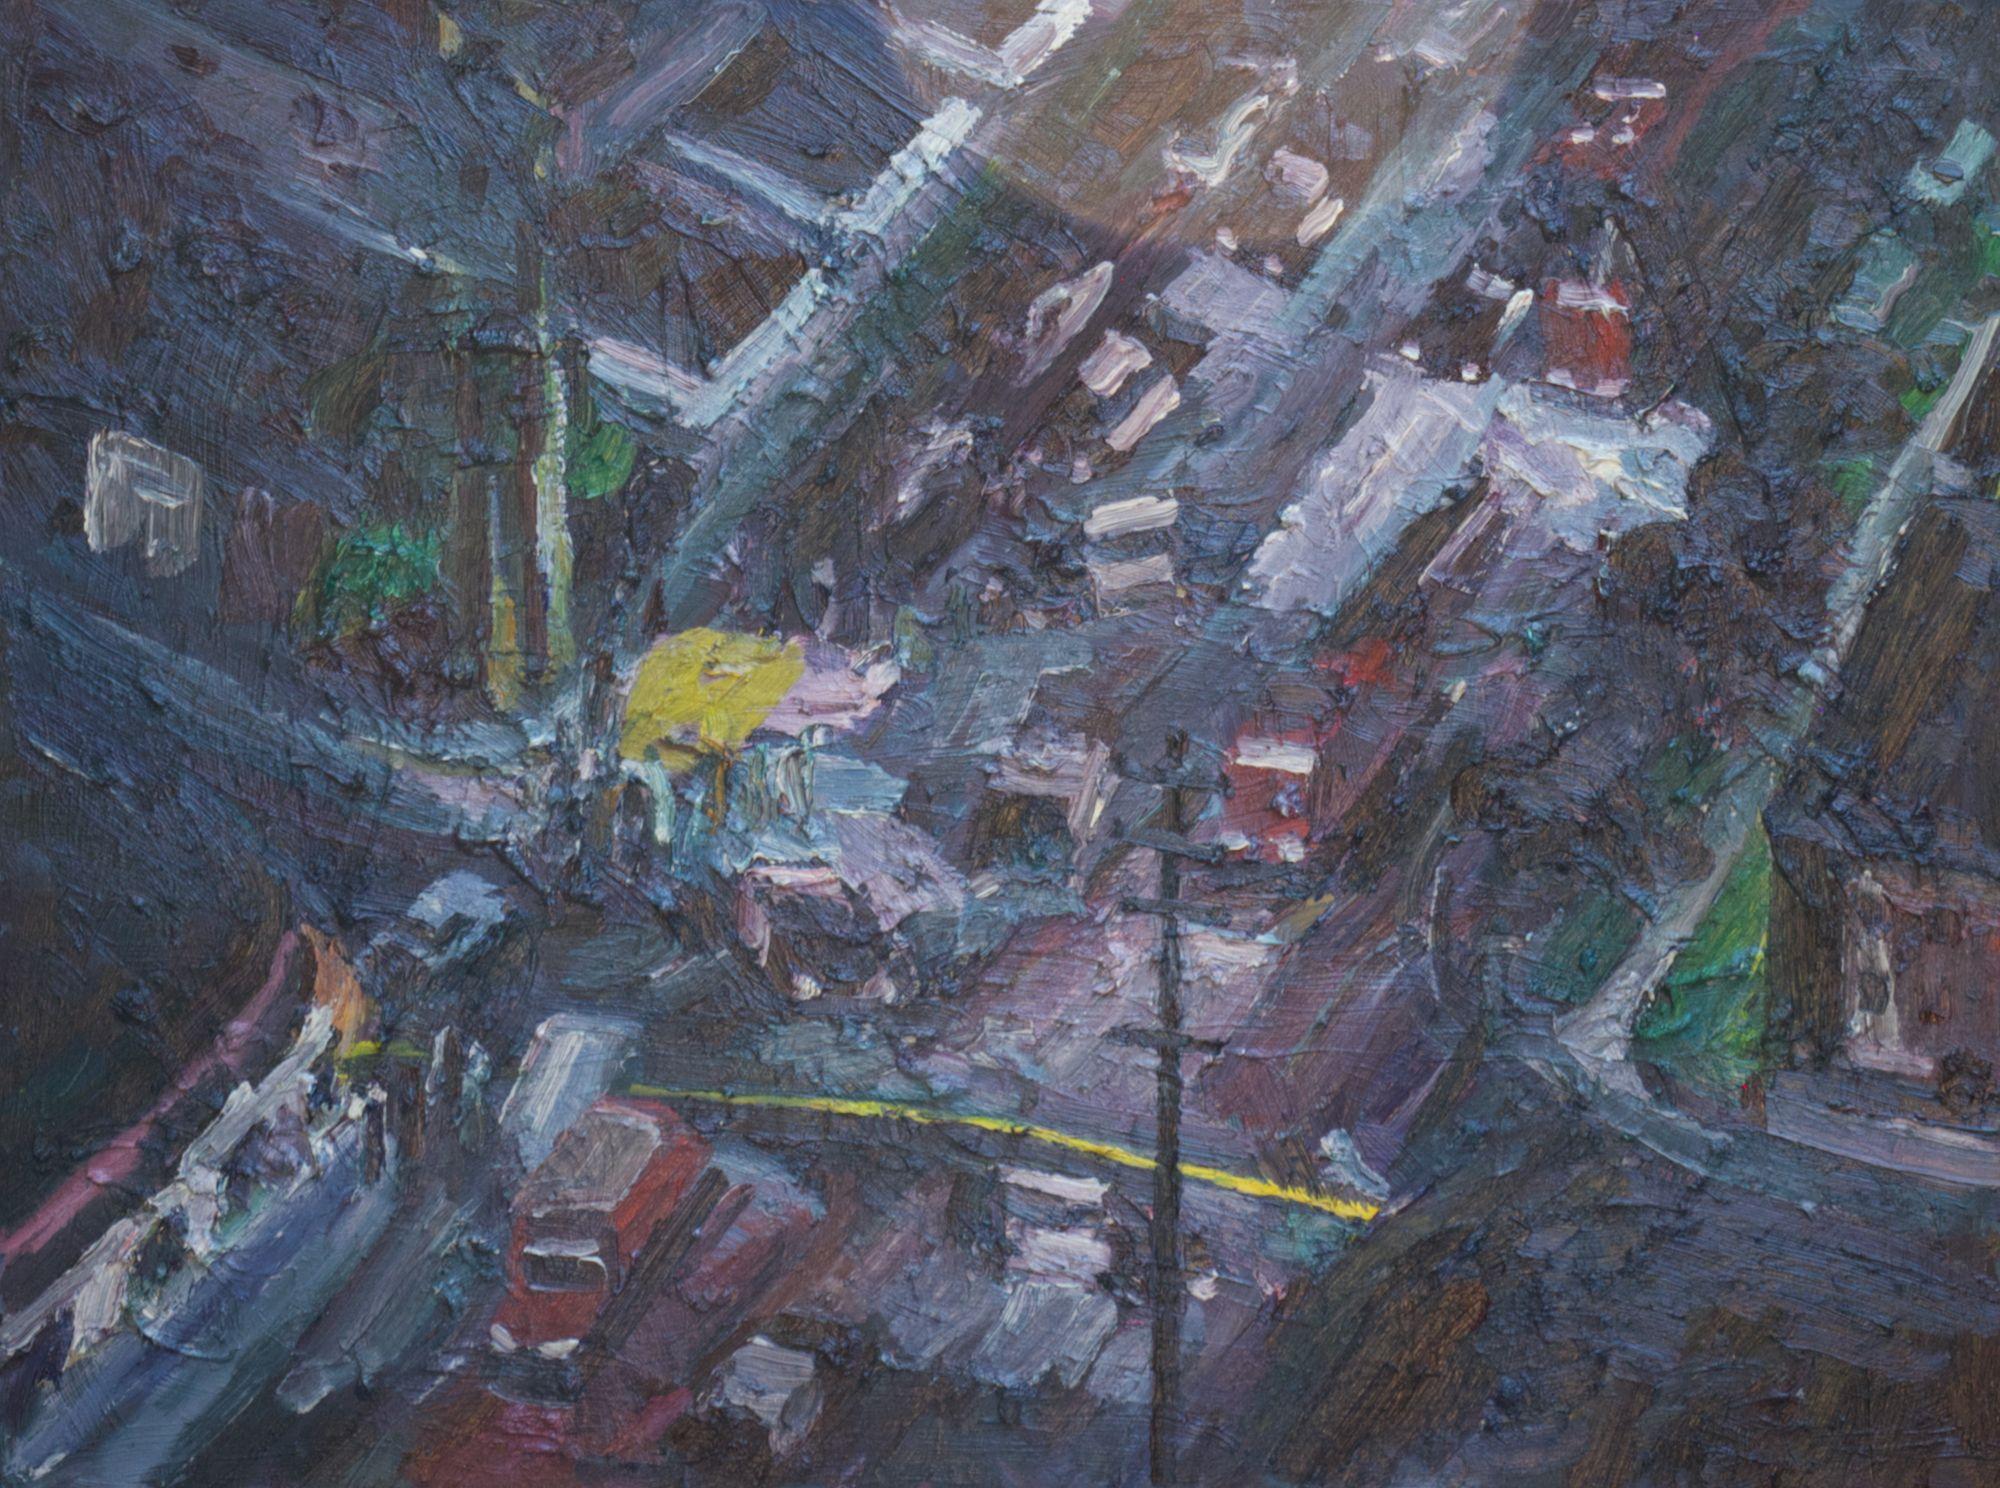 Car crashes into Palm tree, Gemälde, Öl auf Leinwand – Painting von John Kilduff